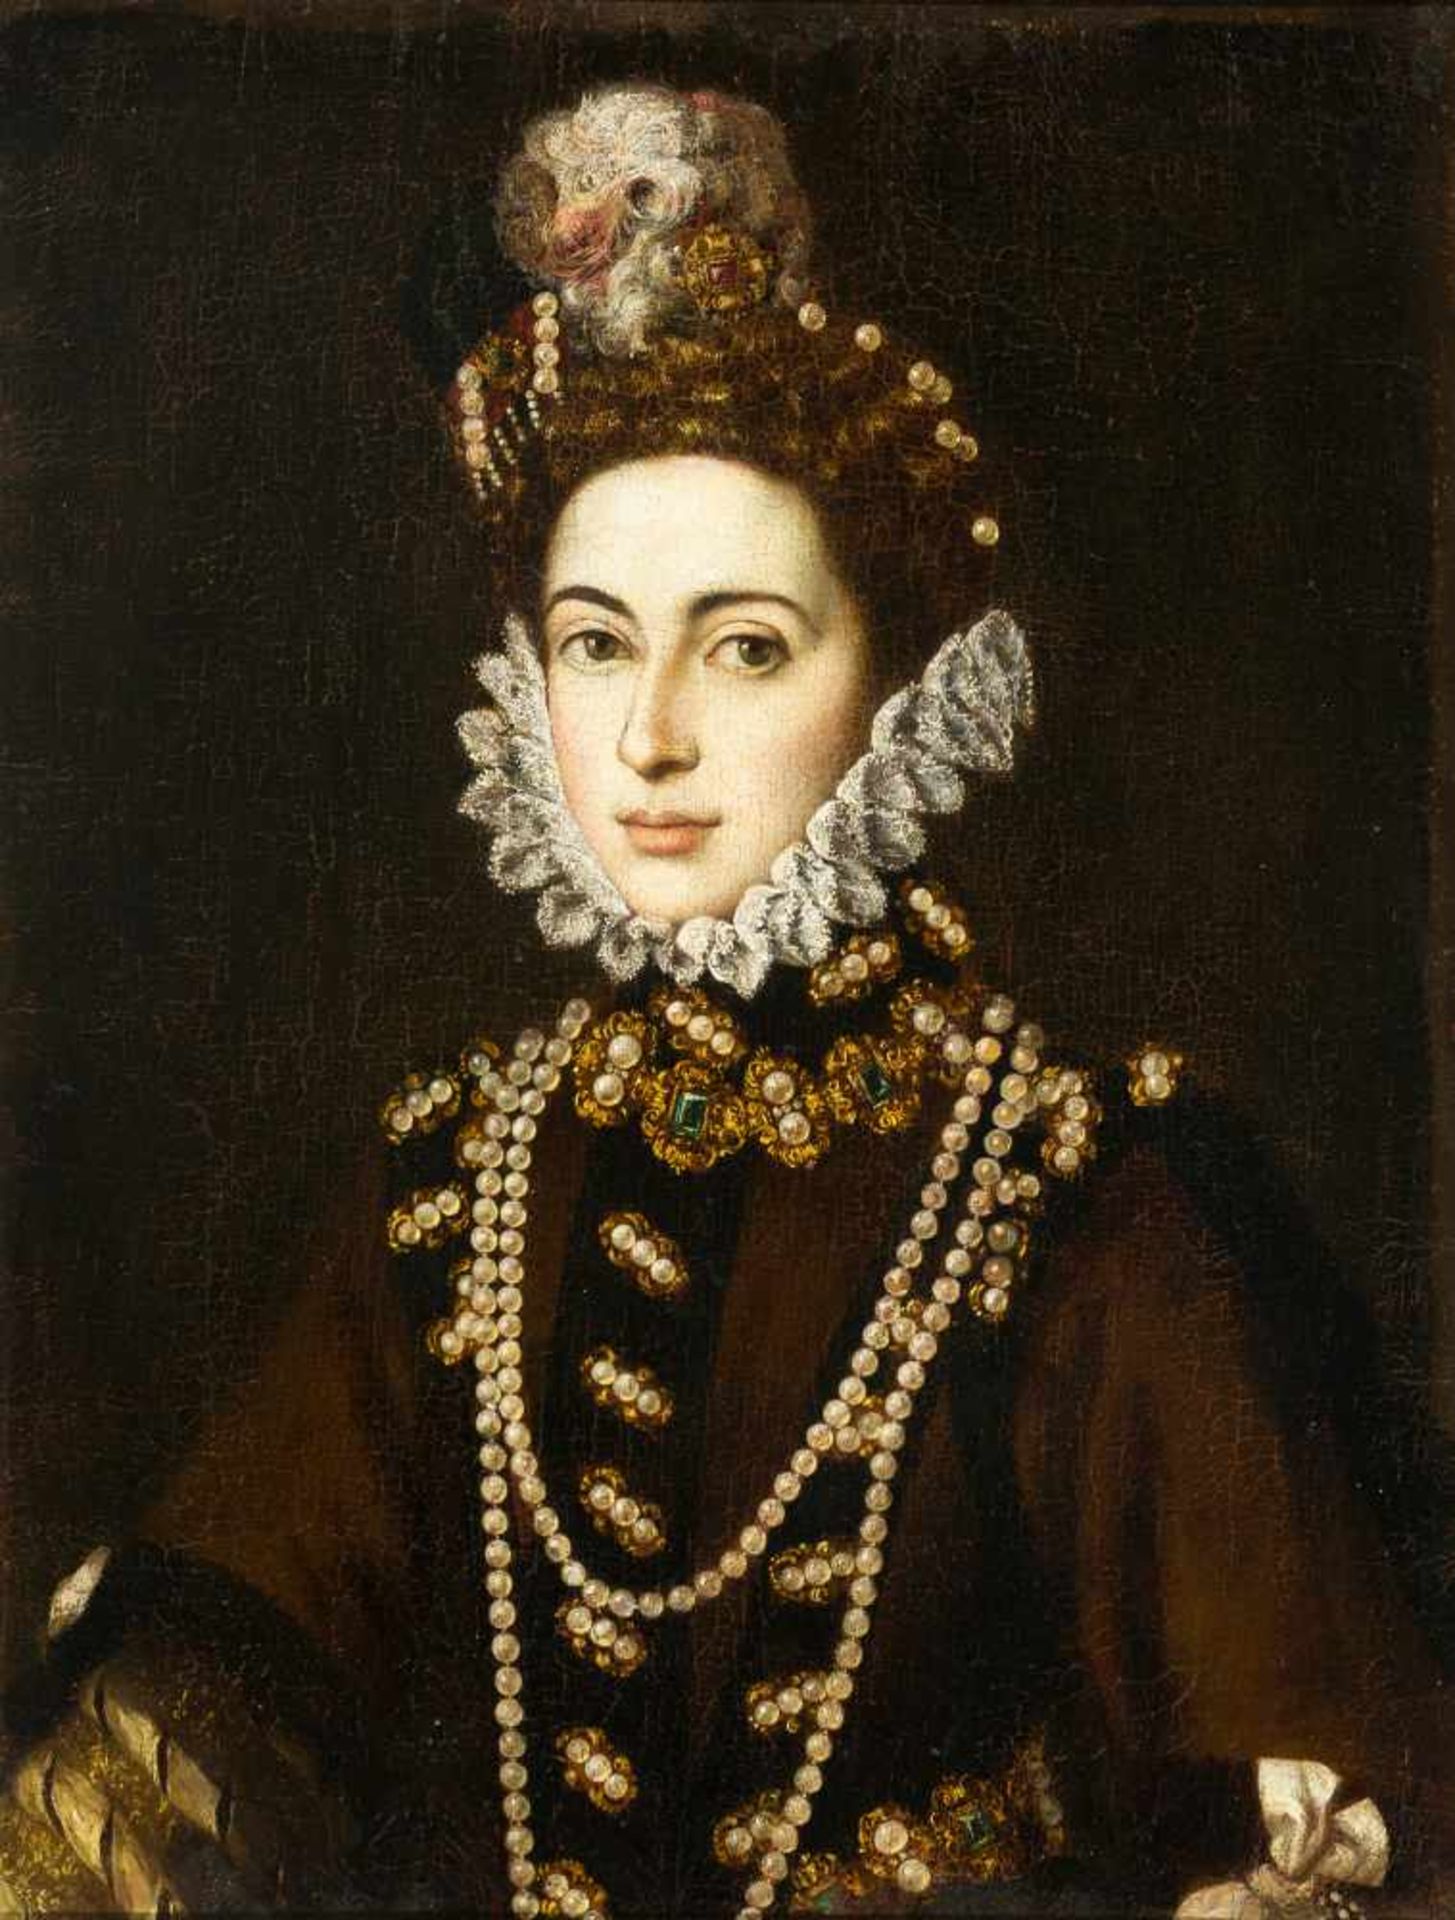 Attributed to Sofonisba Anguissola (Cremona, c. 1535 - Palermo, 1625) "Portrait of the Infanta